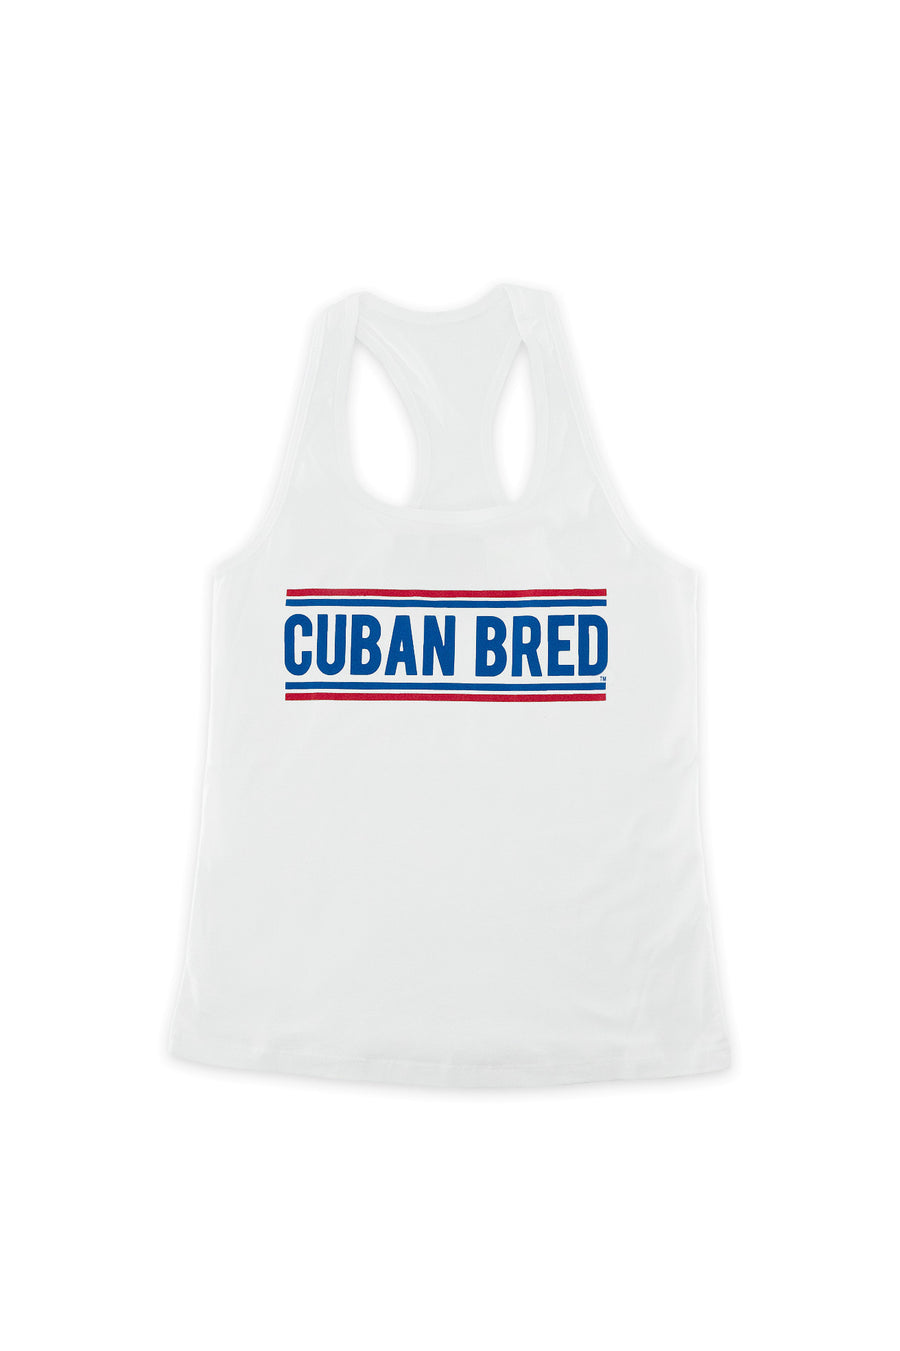 Cuban Bred™ Racerback Tank Top - Women